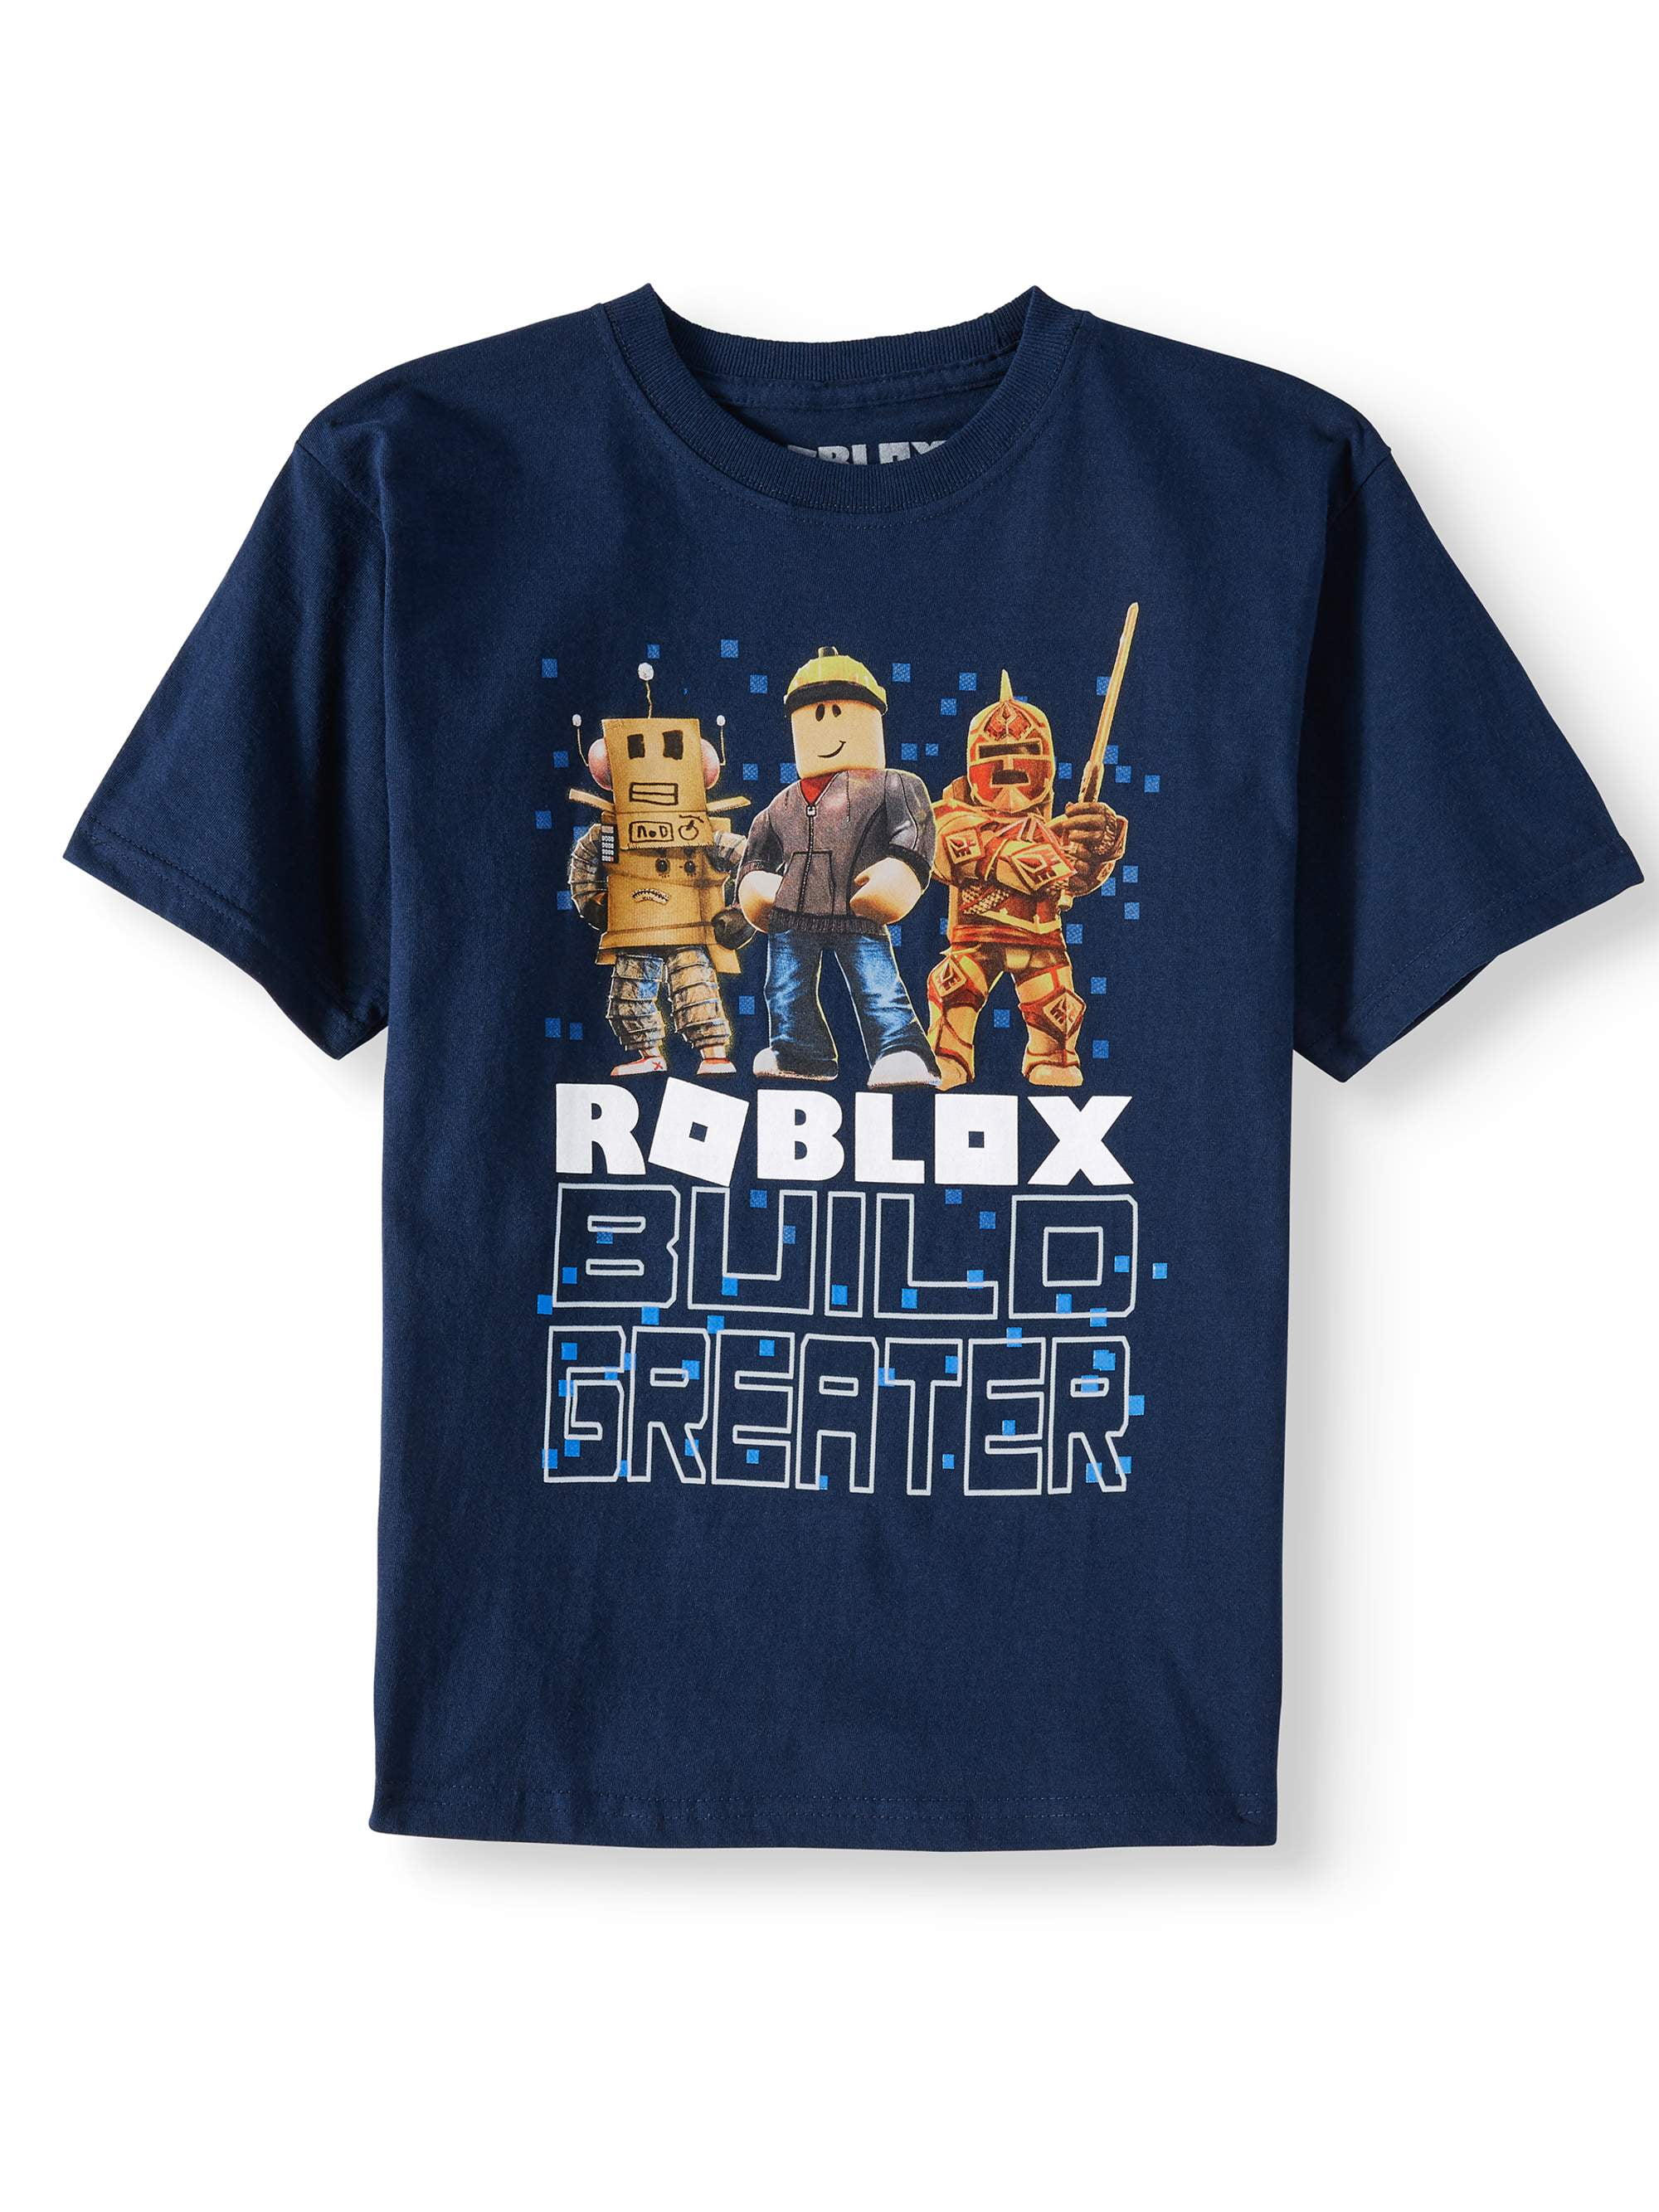 Roblox T Shirt  Free t shirt design, Roblox t shirts, Roblox t-shirt